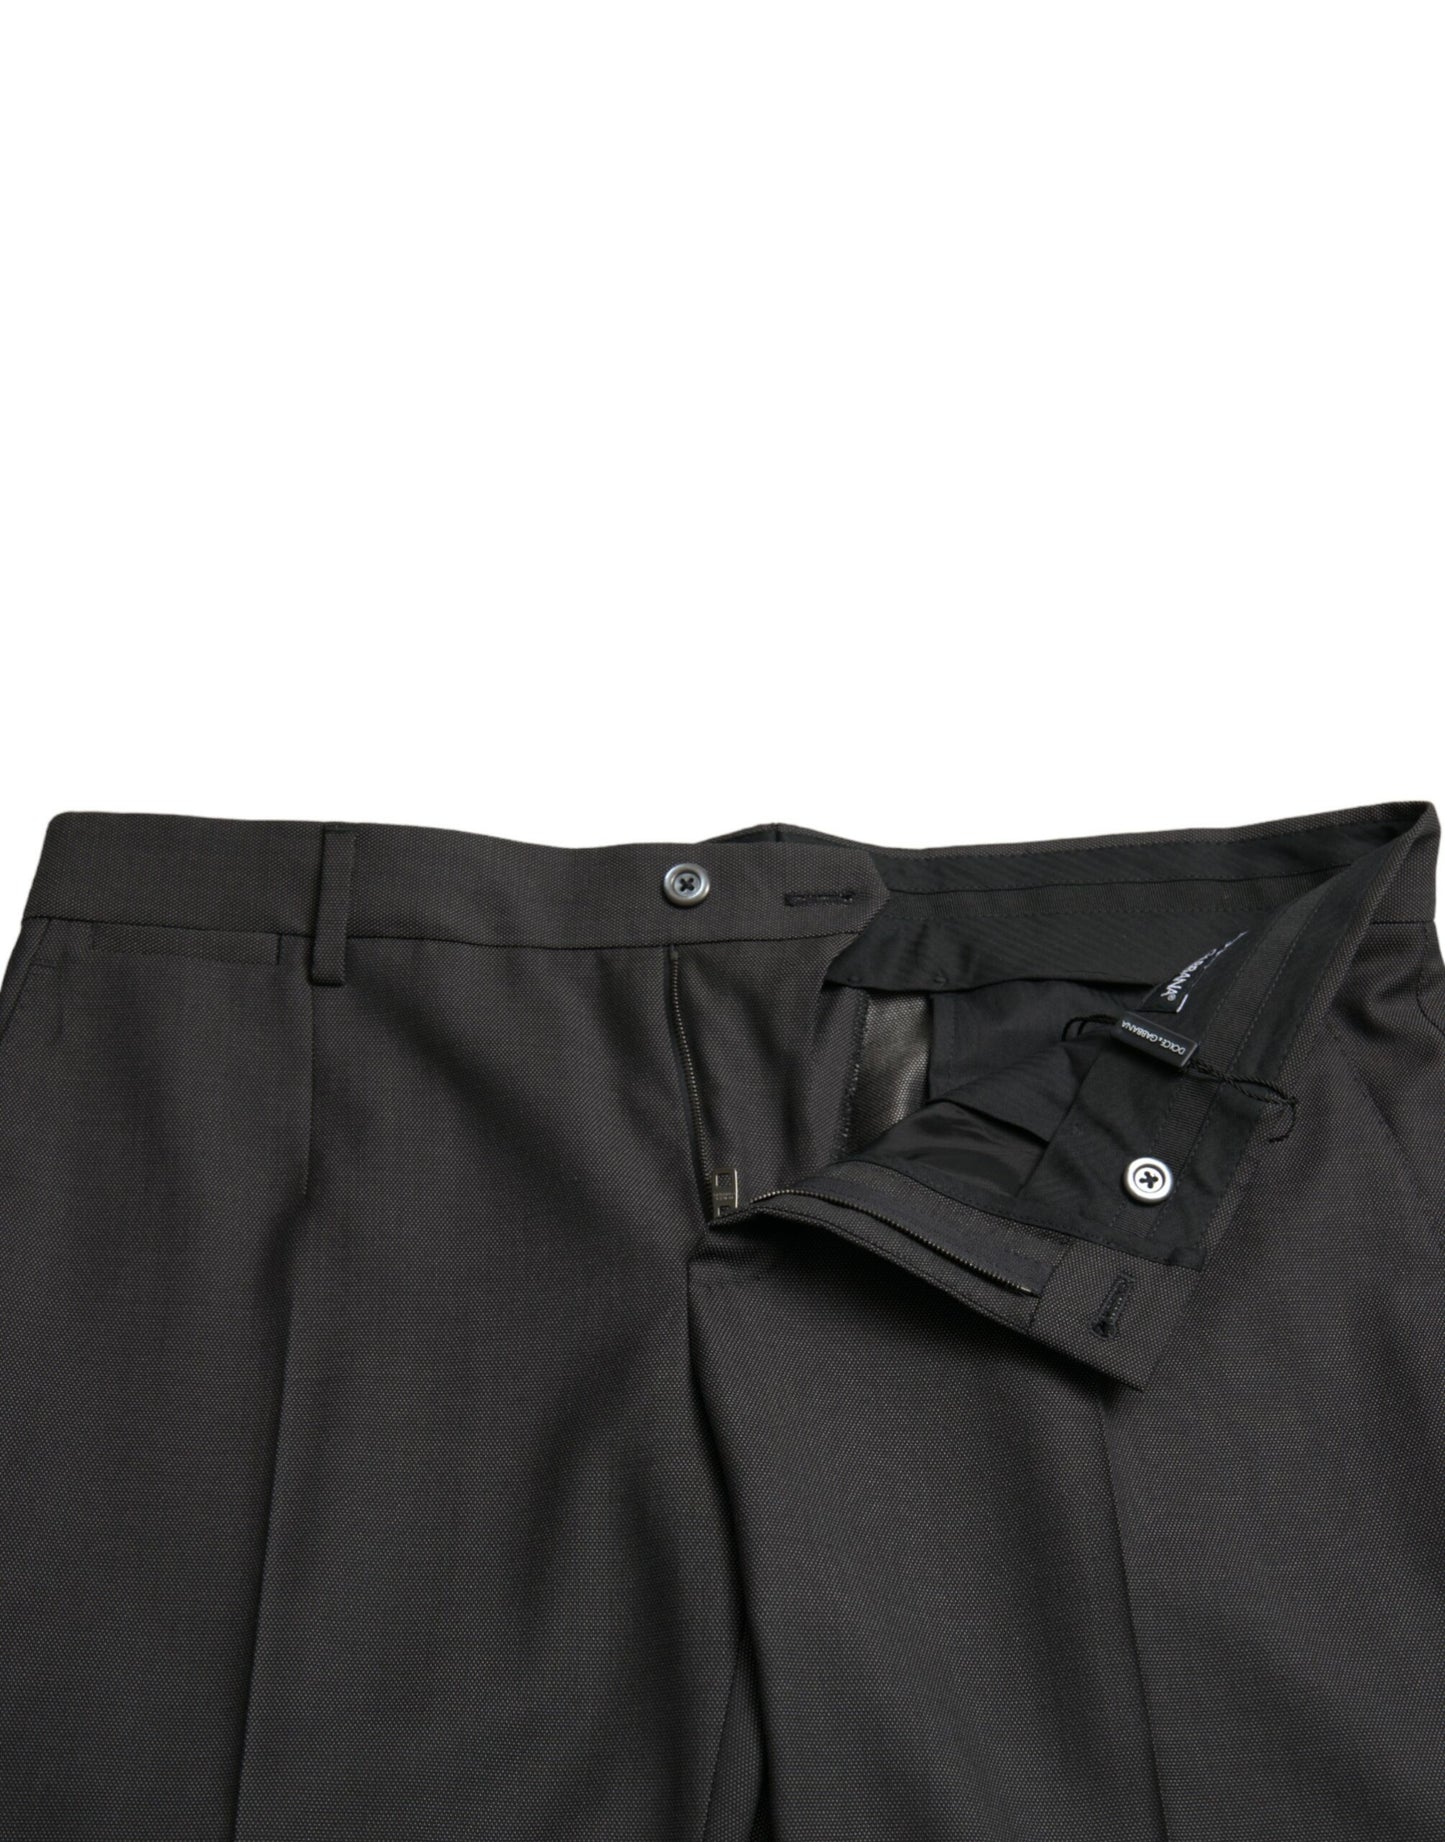 Dolce & Gabbana Elegant Dark Grey Skinny Dress Pants